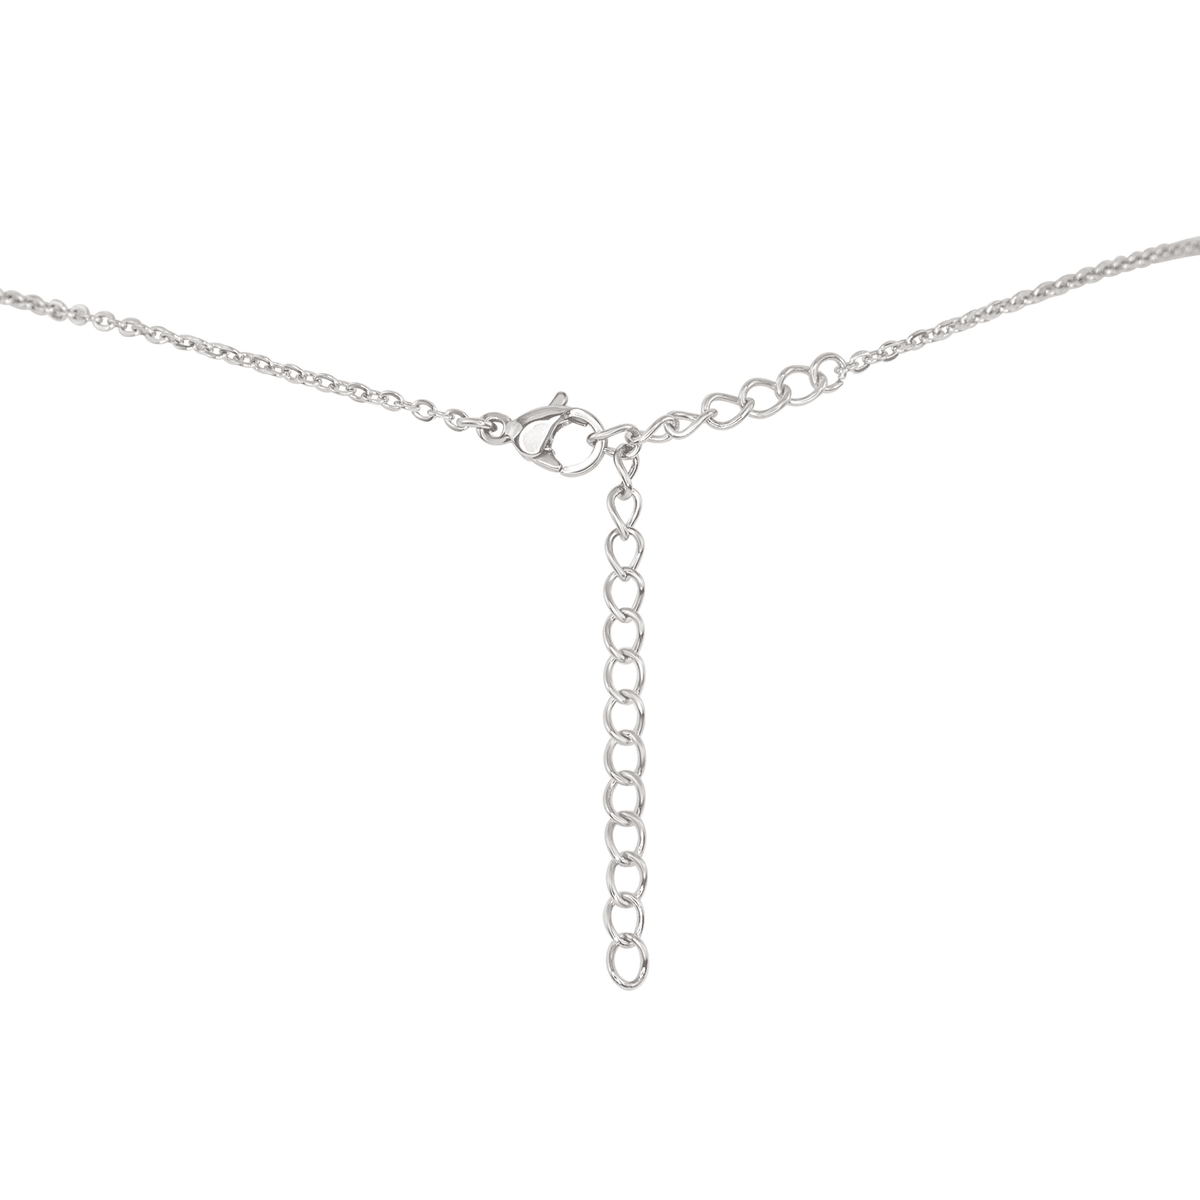 Amethyst Beaded Chain Choker Necklace - Amethyst Beaded Chain Choker Necklace - Sterling Silver - Luna Tide Handmade Crystal Jewellery